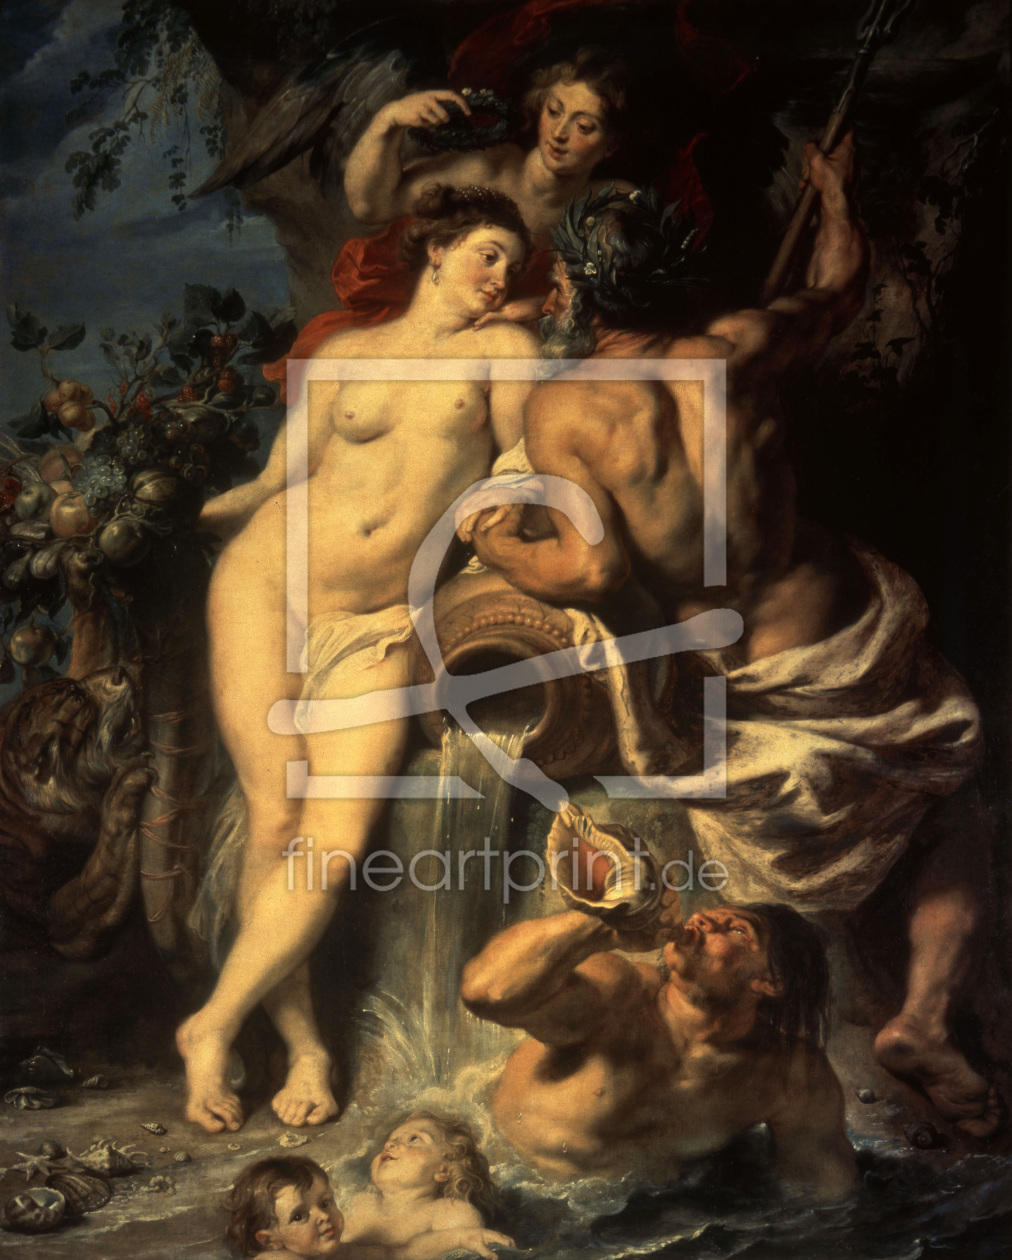 Bild-Nr.: 30005136 Rubens / Neptune and Cybele erstellt von Rubens, Peter Paul